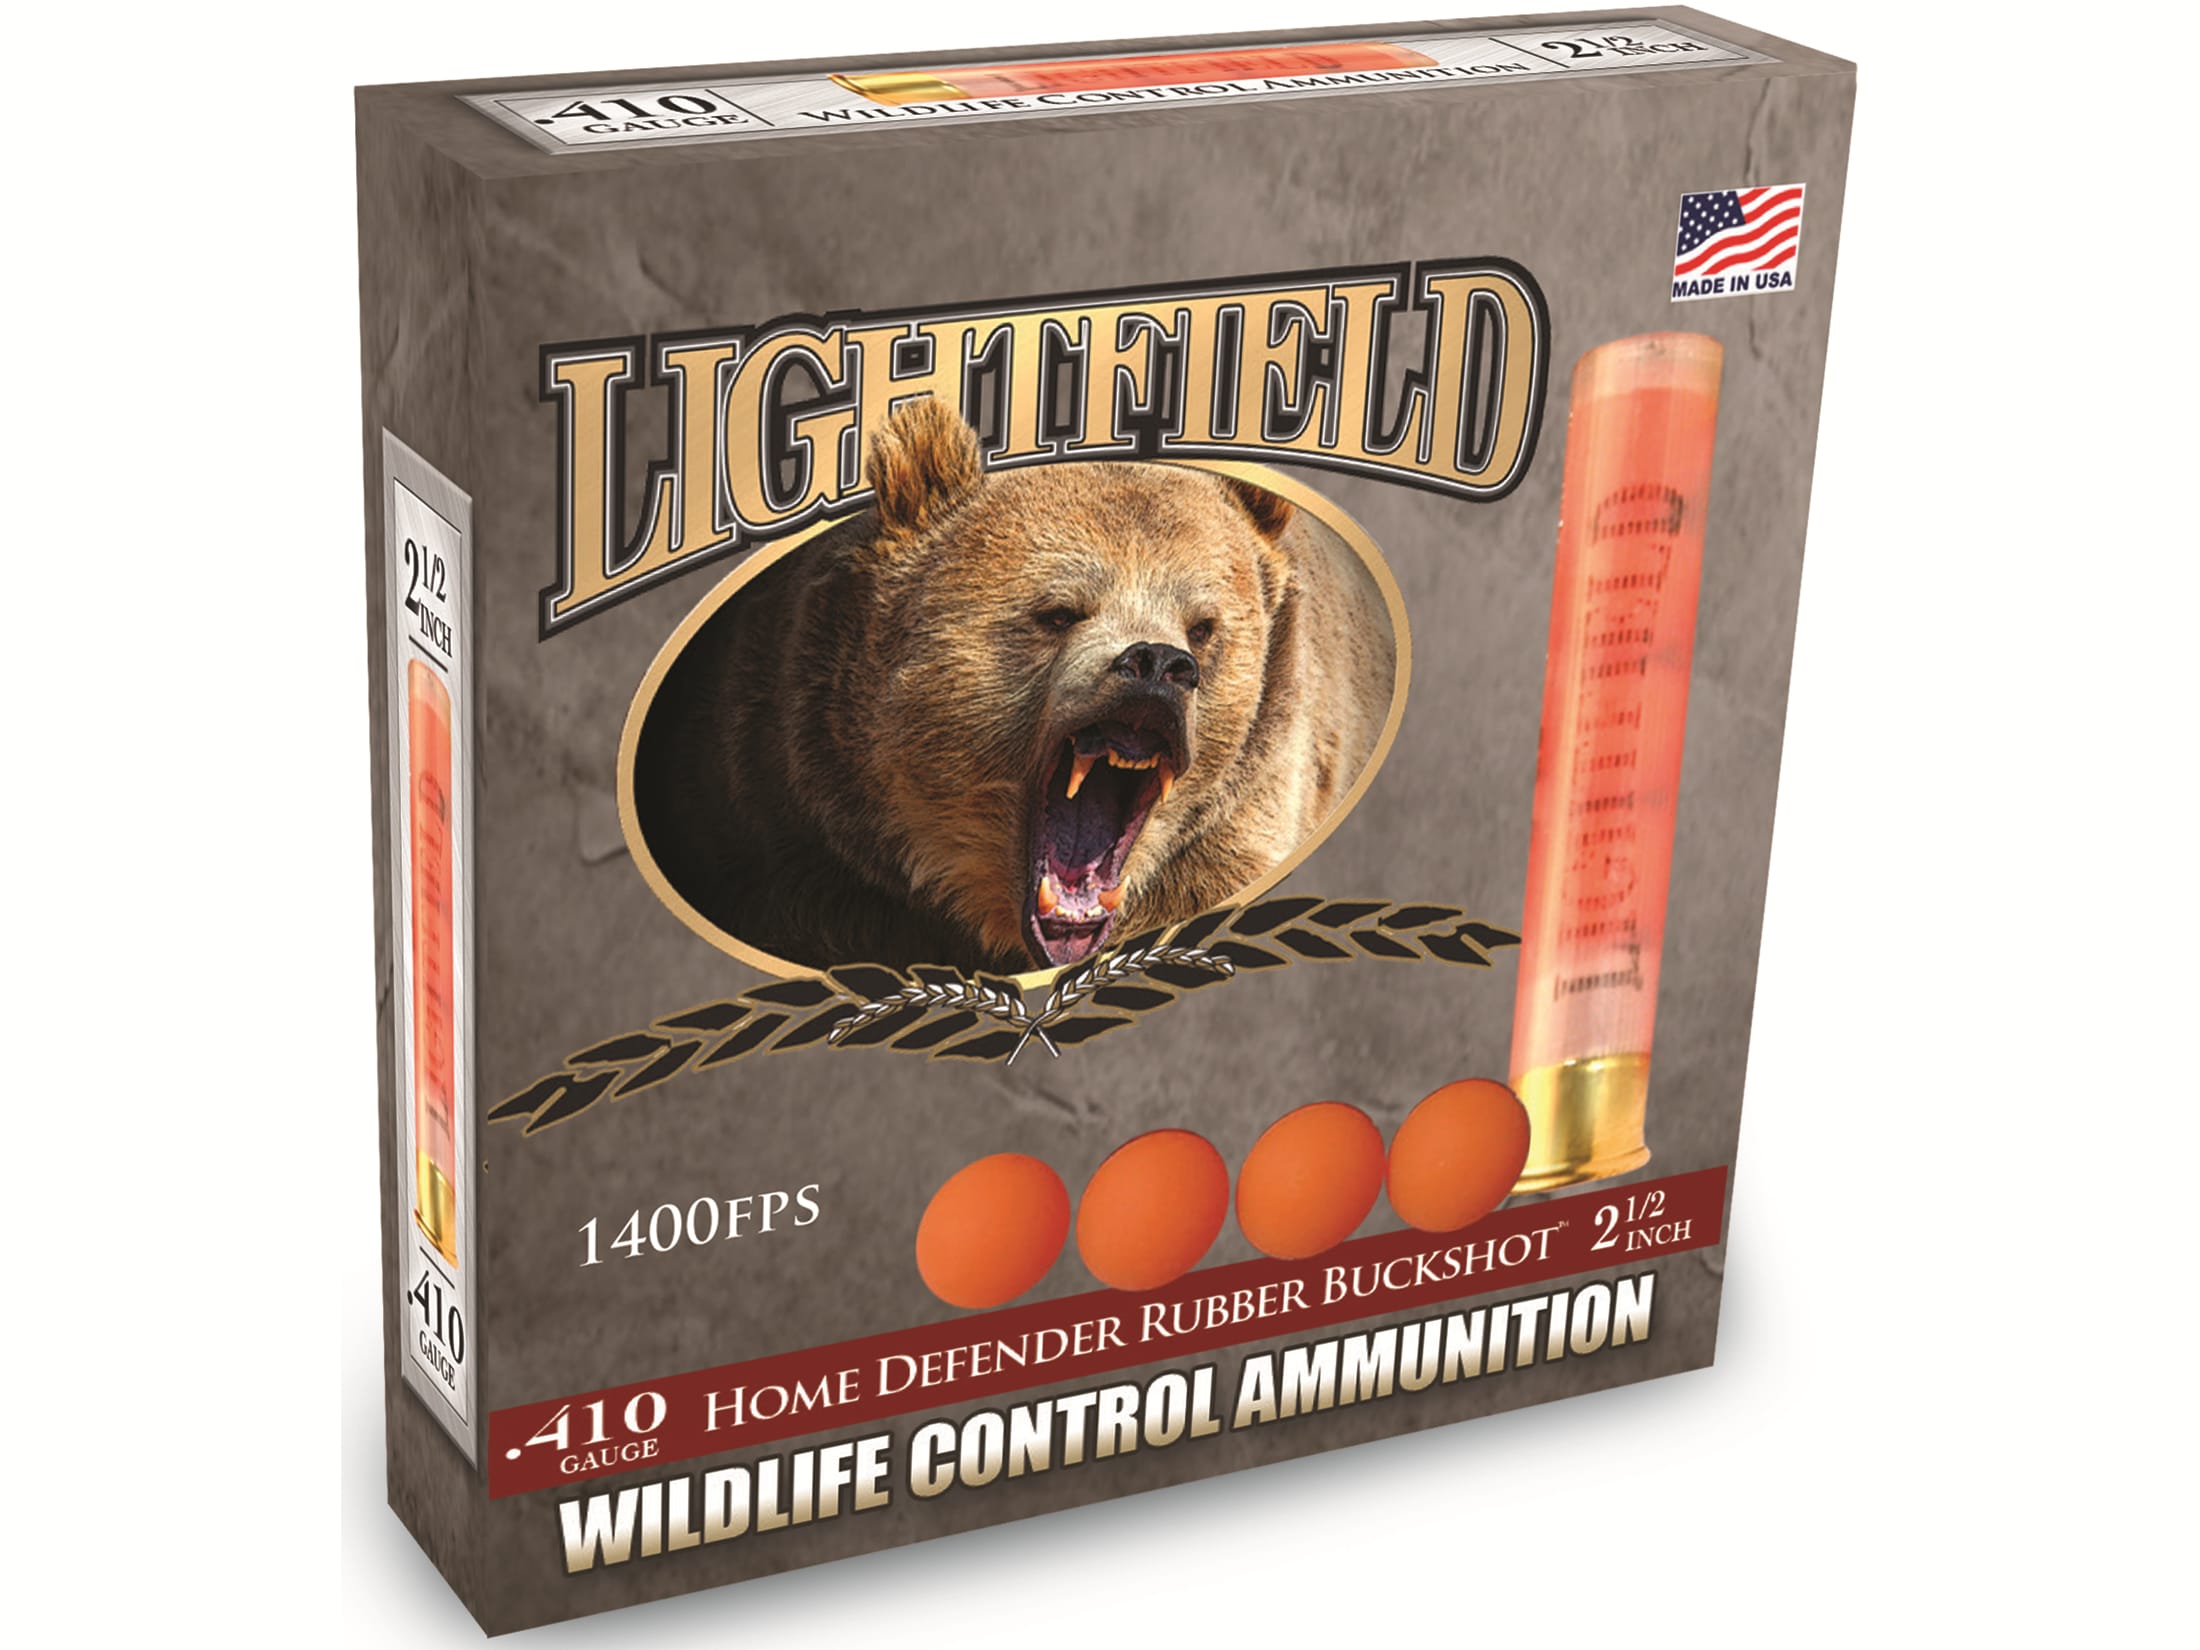 Lightfield Wildlife Control Less Lethal 410 Ammo 2 1 2 Rubber Buckshot